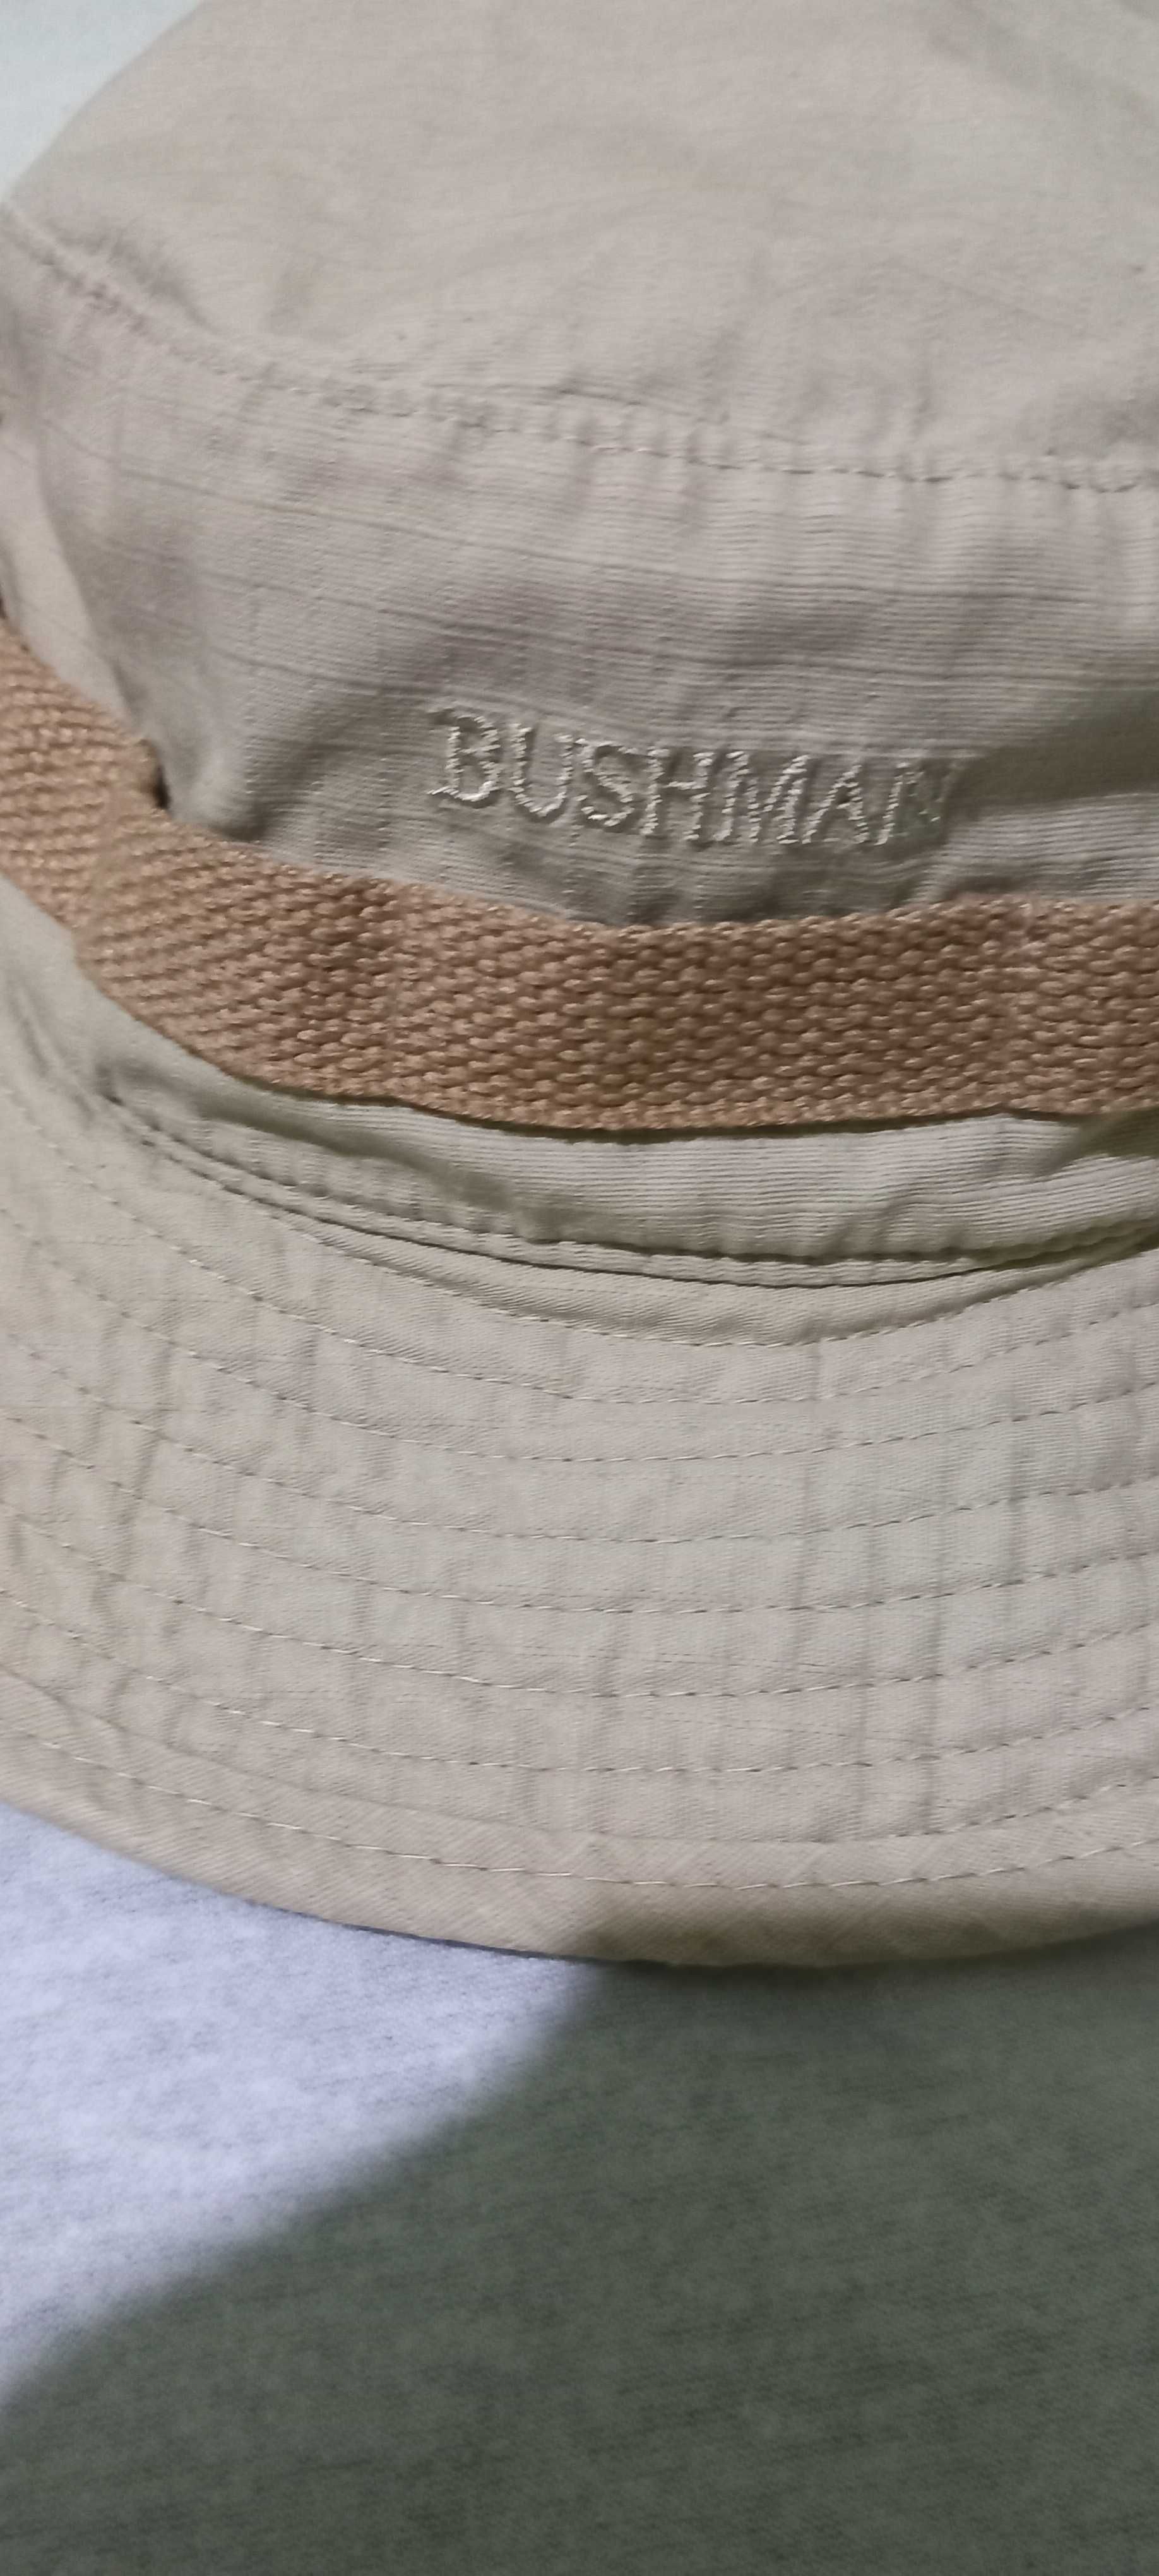 BUSHMAN,шапка с периферия.100% cotton.L размер(60см).